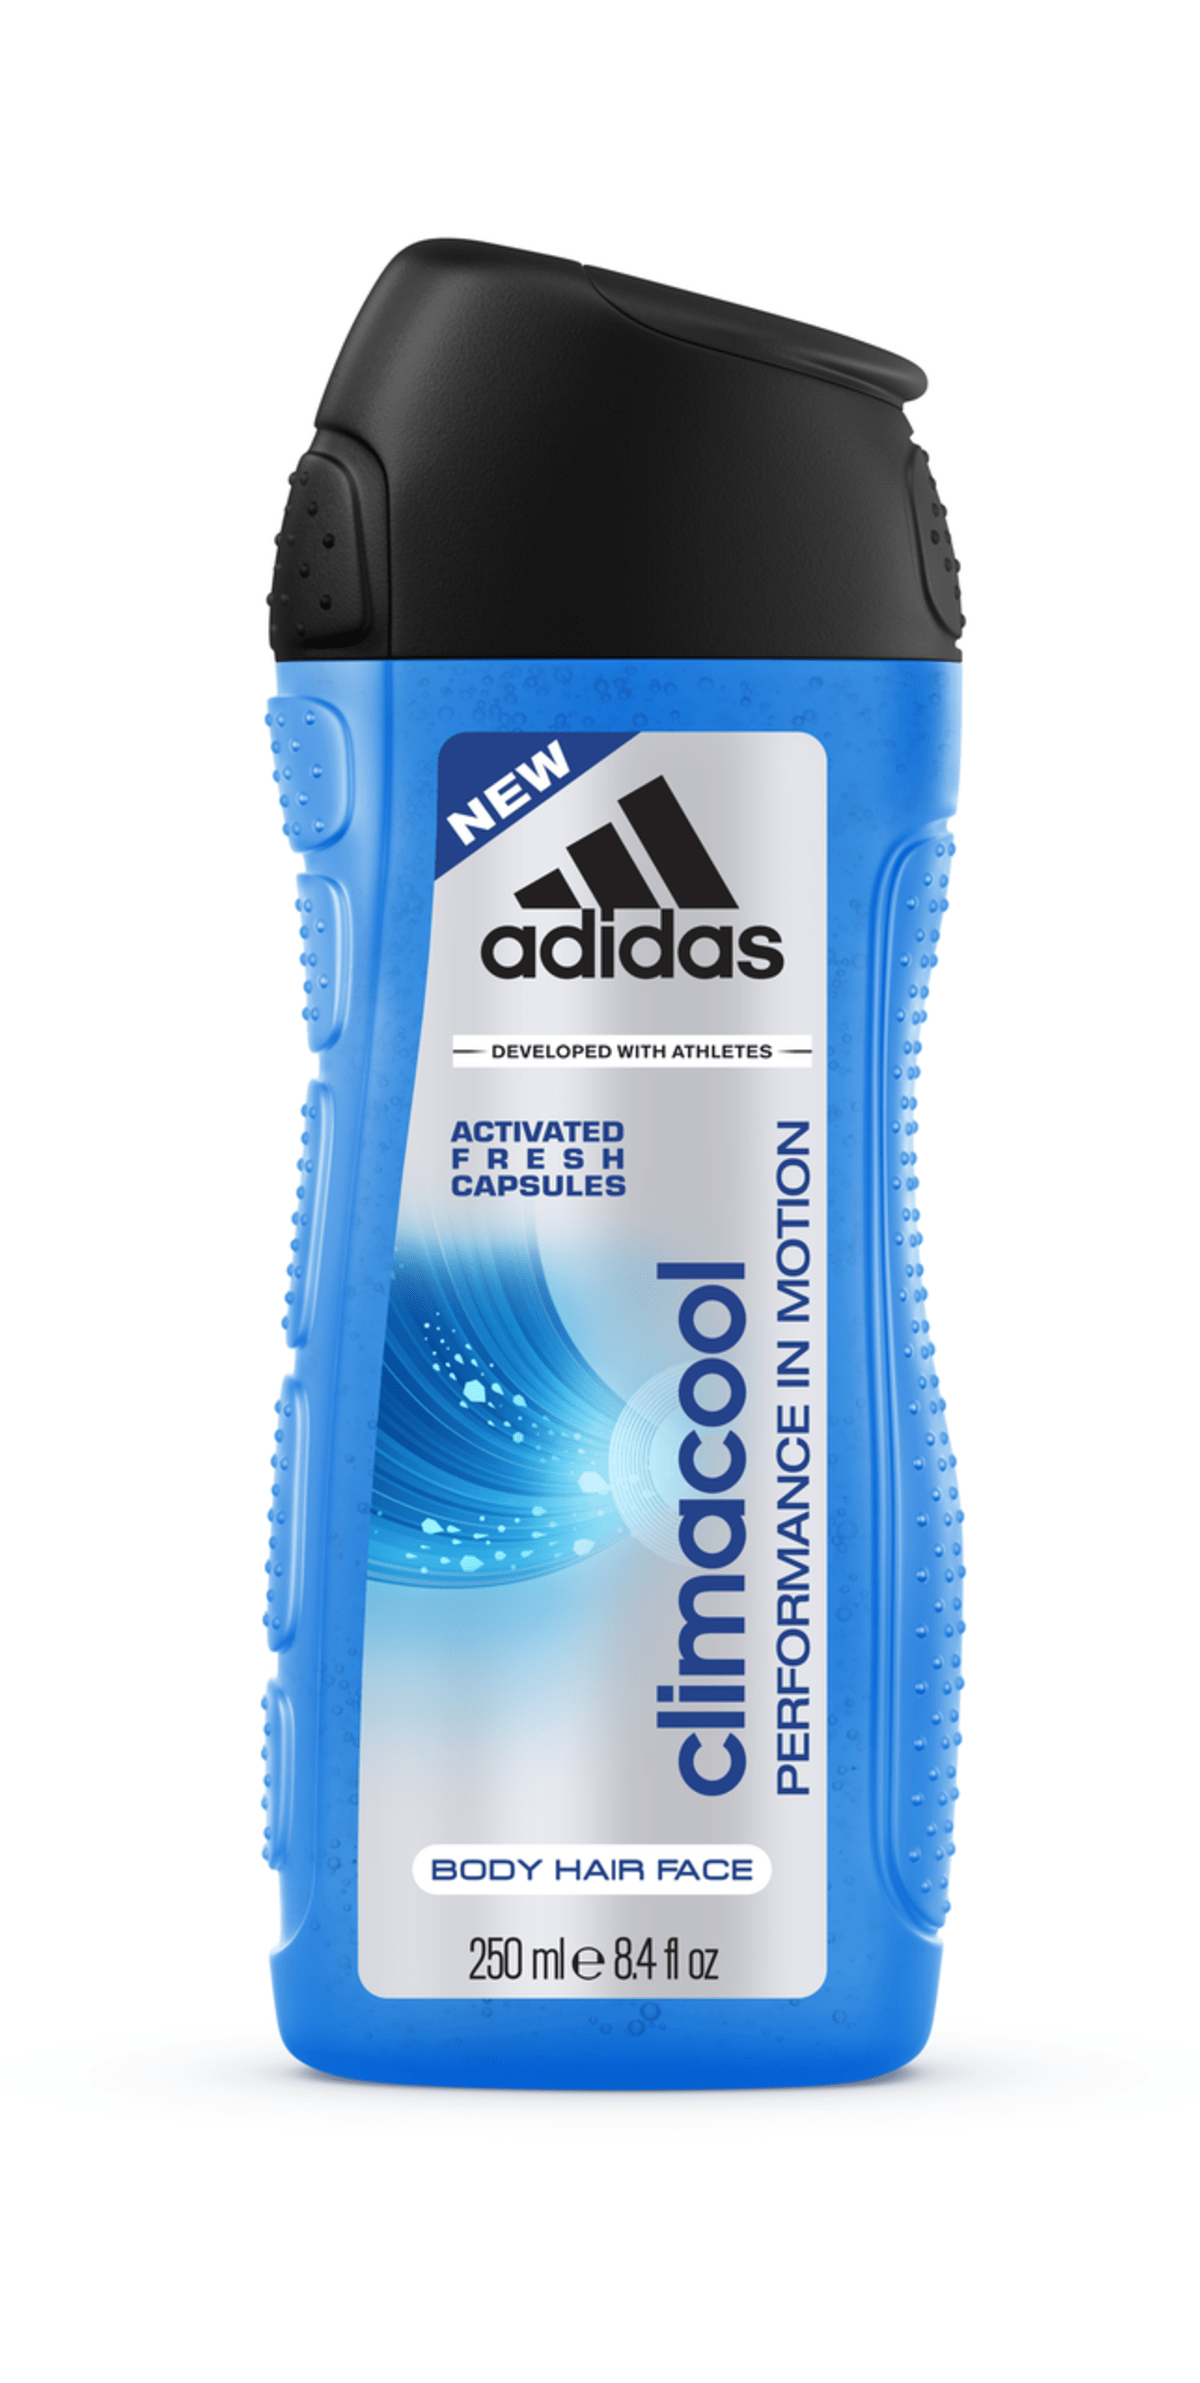 Sprchový gel Climacool Adidas, 79 Kč